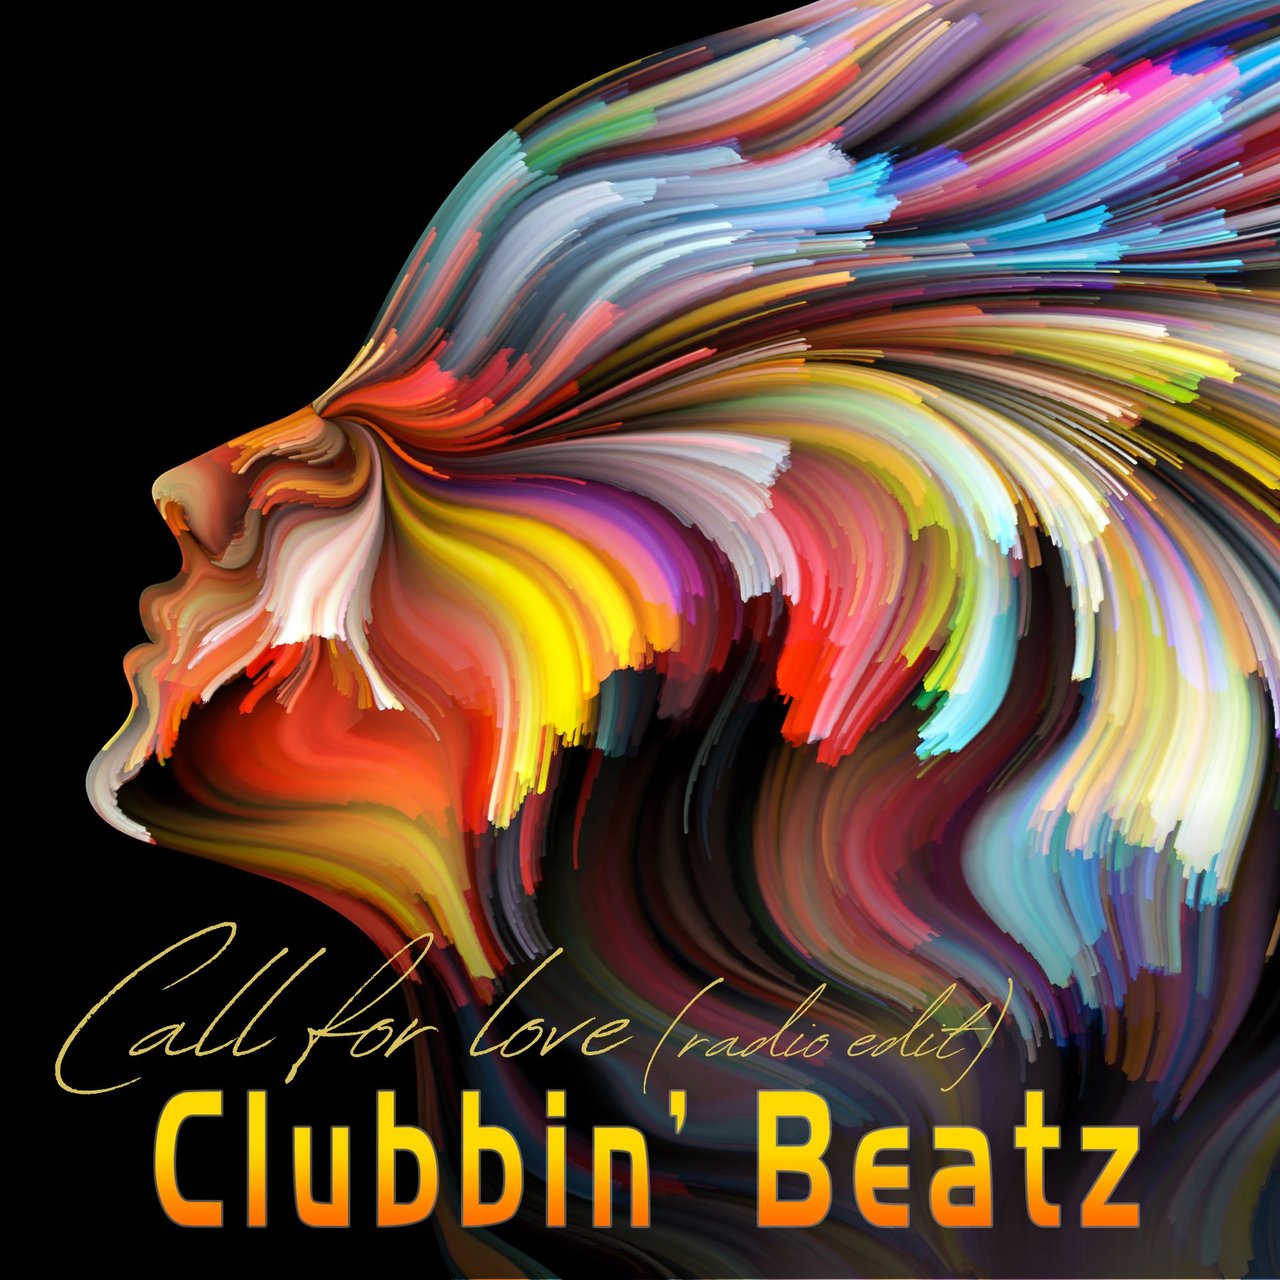 Clubbin' Beatz - Call for Love